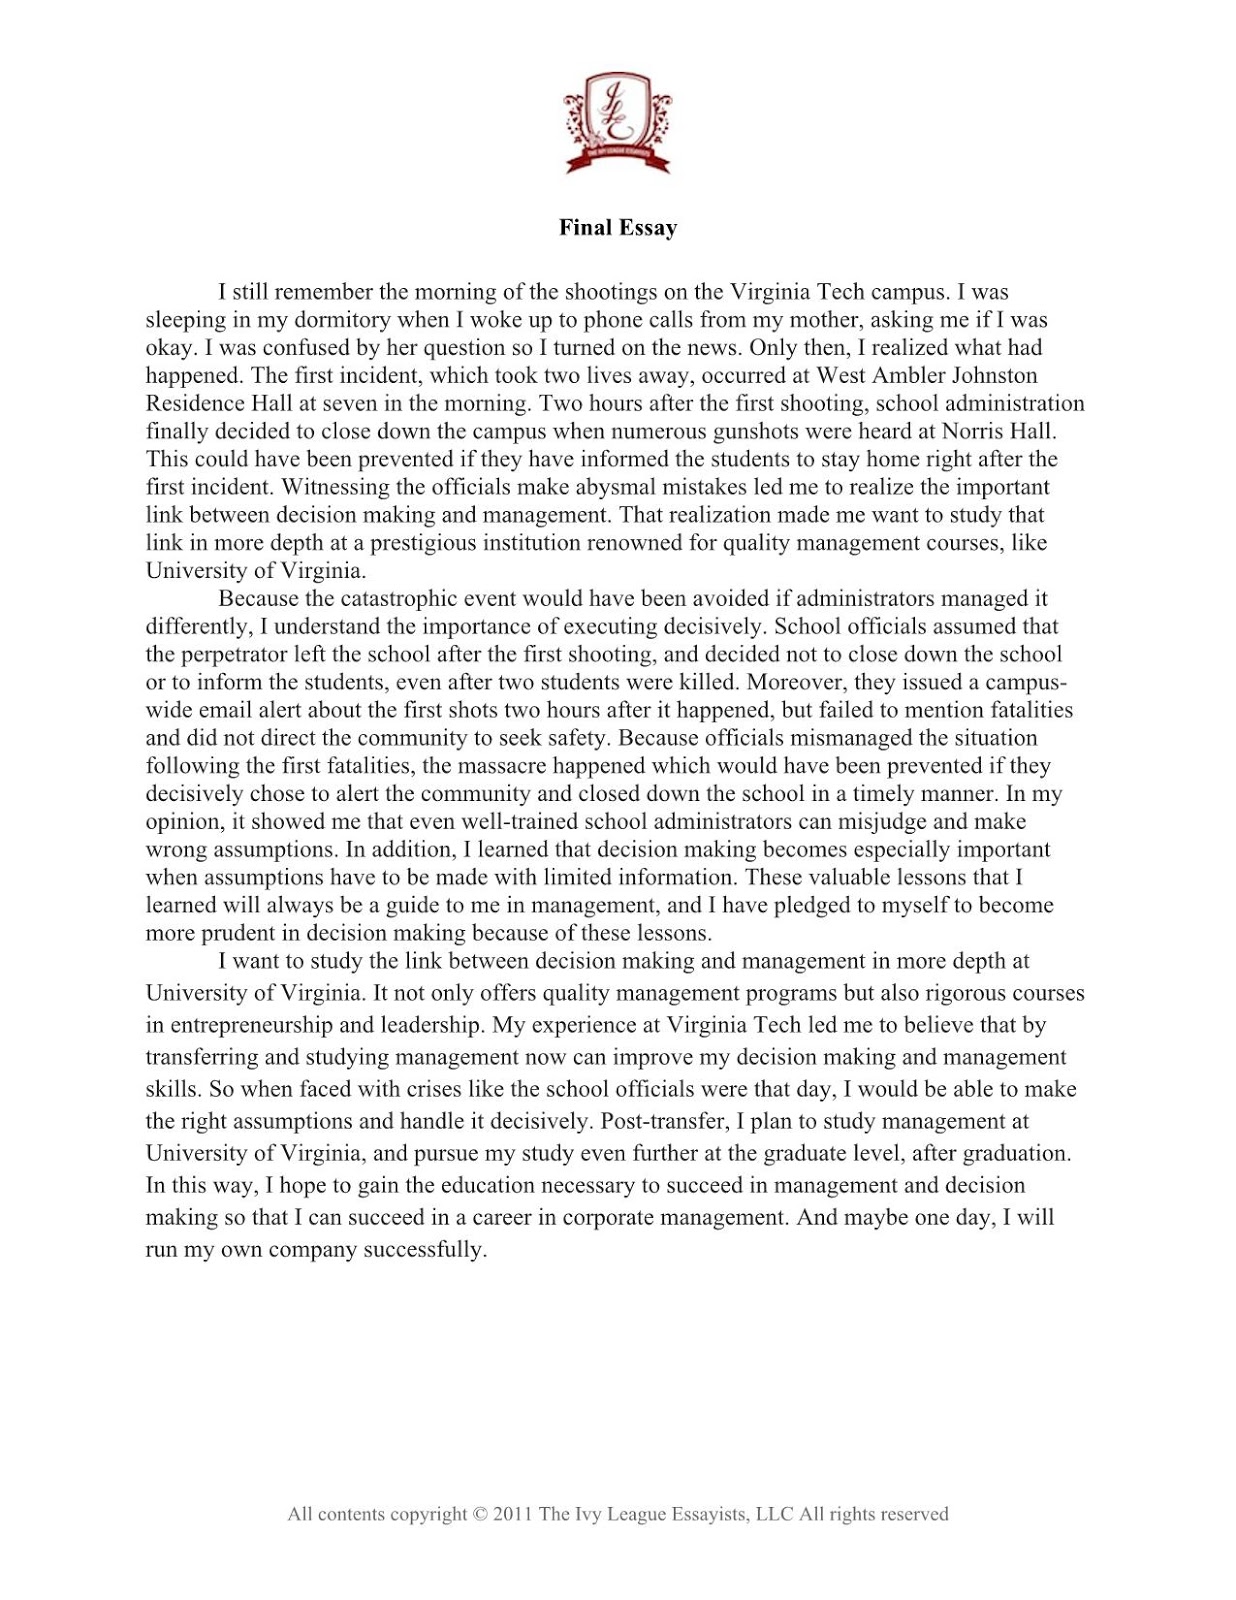 Virginia tech college essay prompt 2013